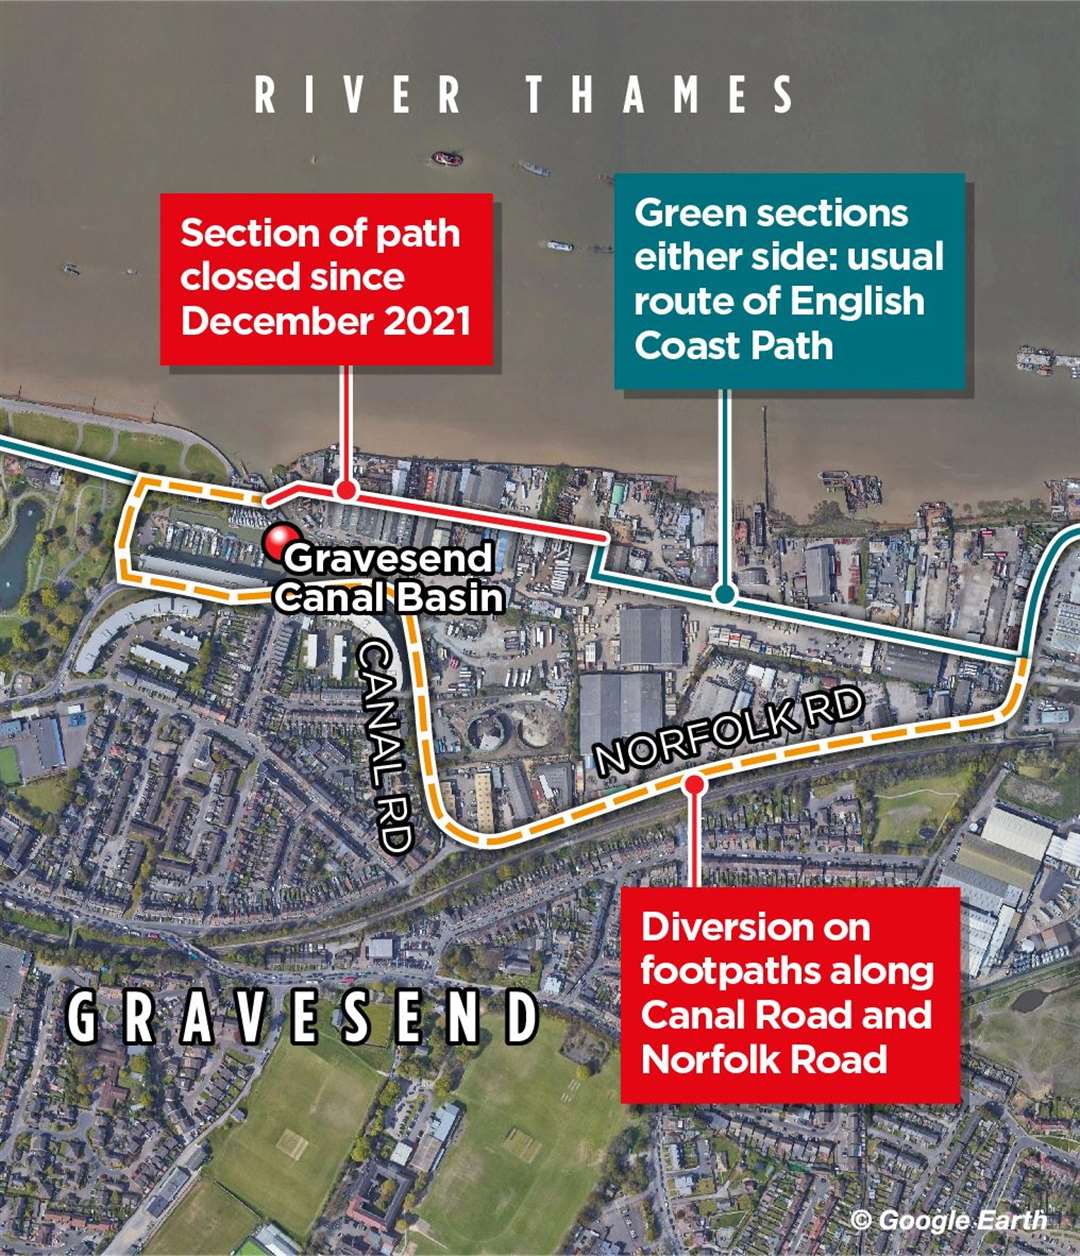 The English Coast Path diversion route in Gravesend